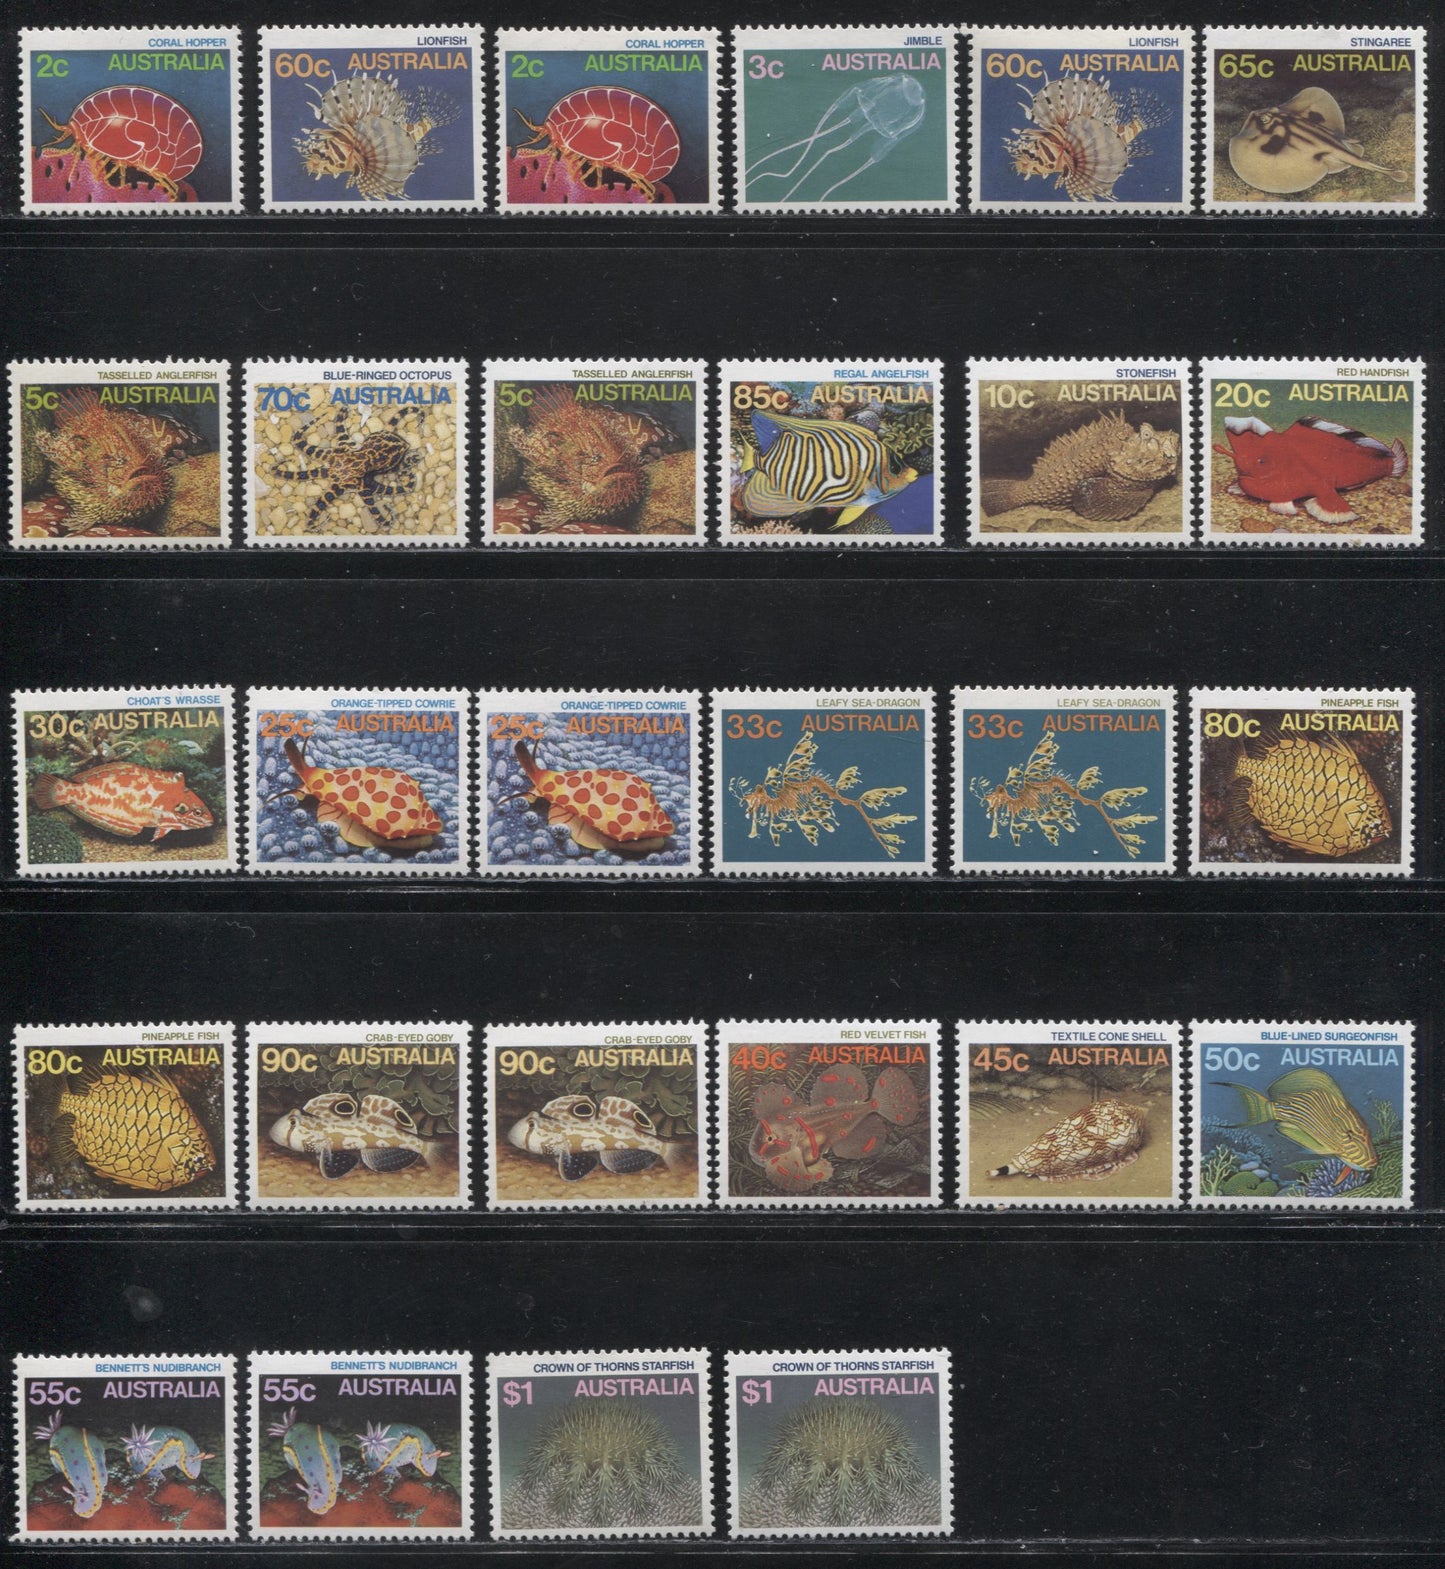 Lot 304 Australia SC#902-920 1984-1986 Marine Life Definitives, A VFNH Complete Set Wth Additional Paper Varieties of Many Values, Scott Cat. $22.25